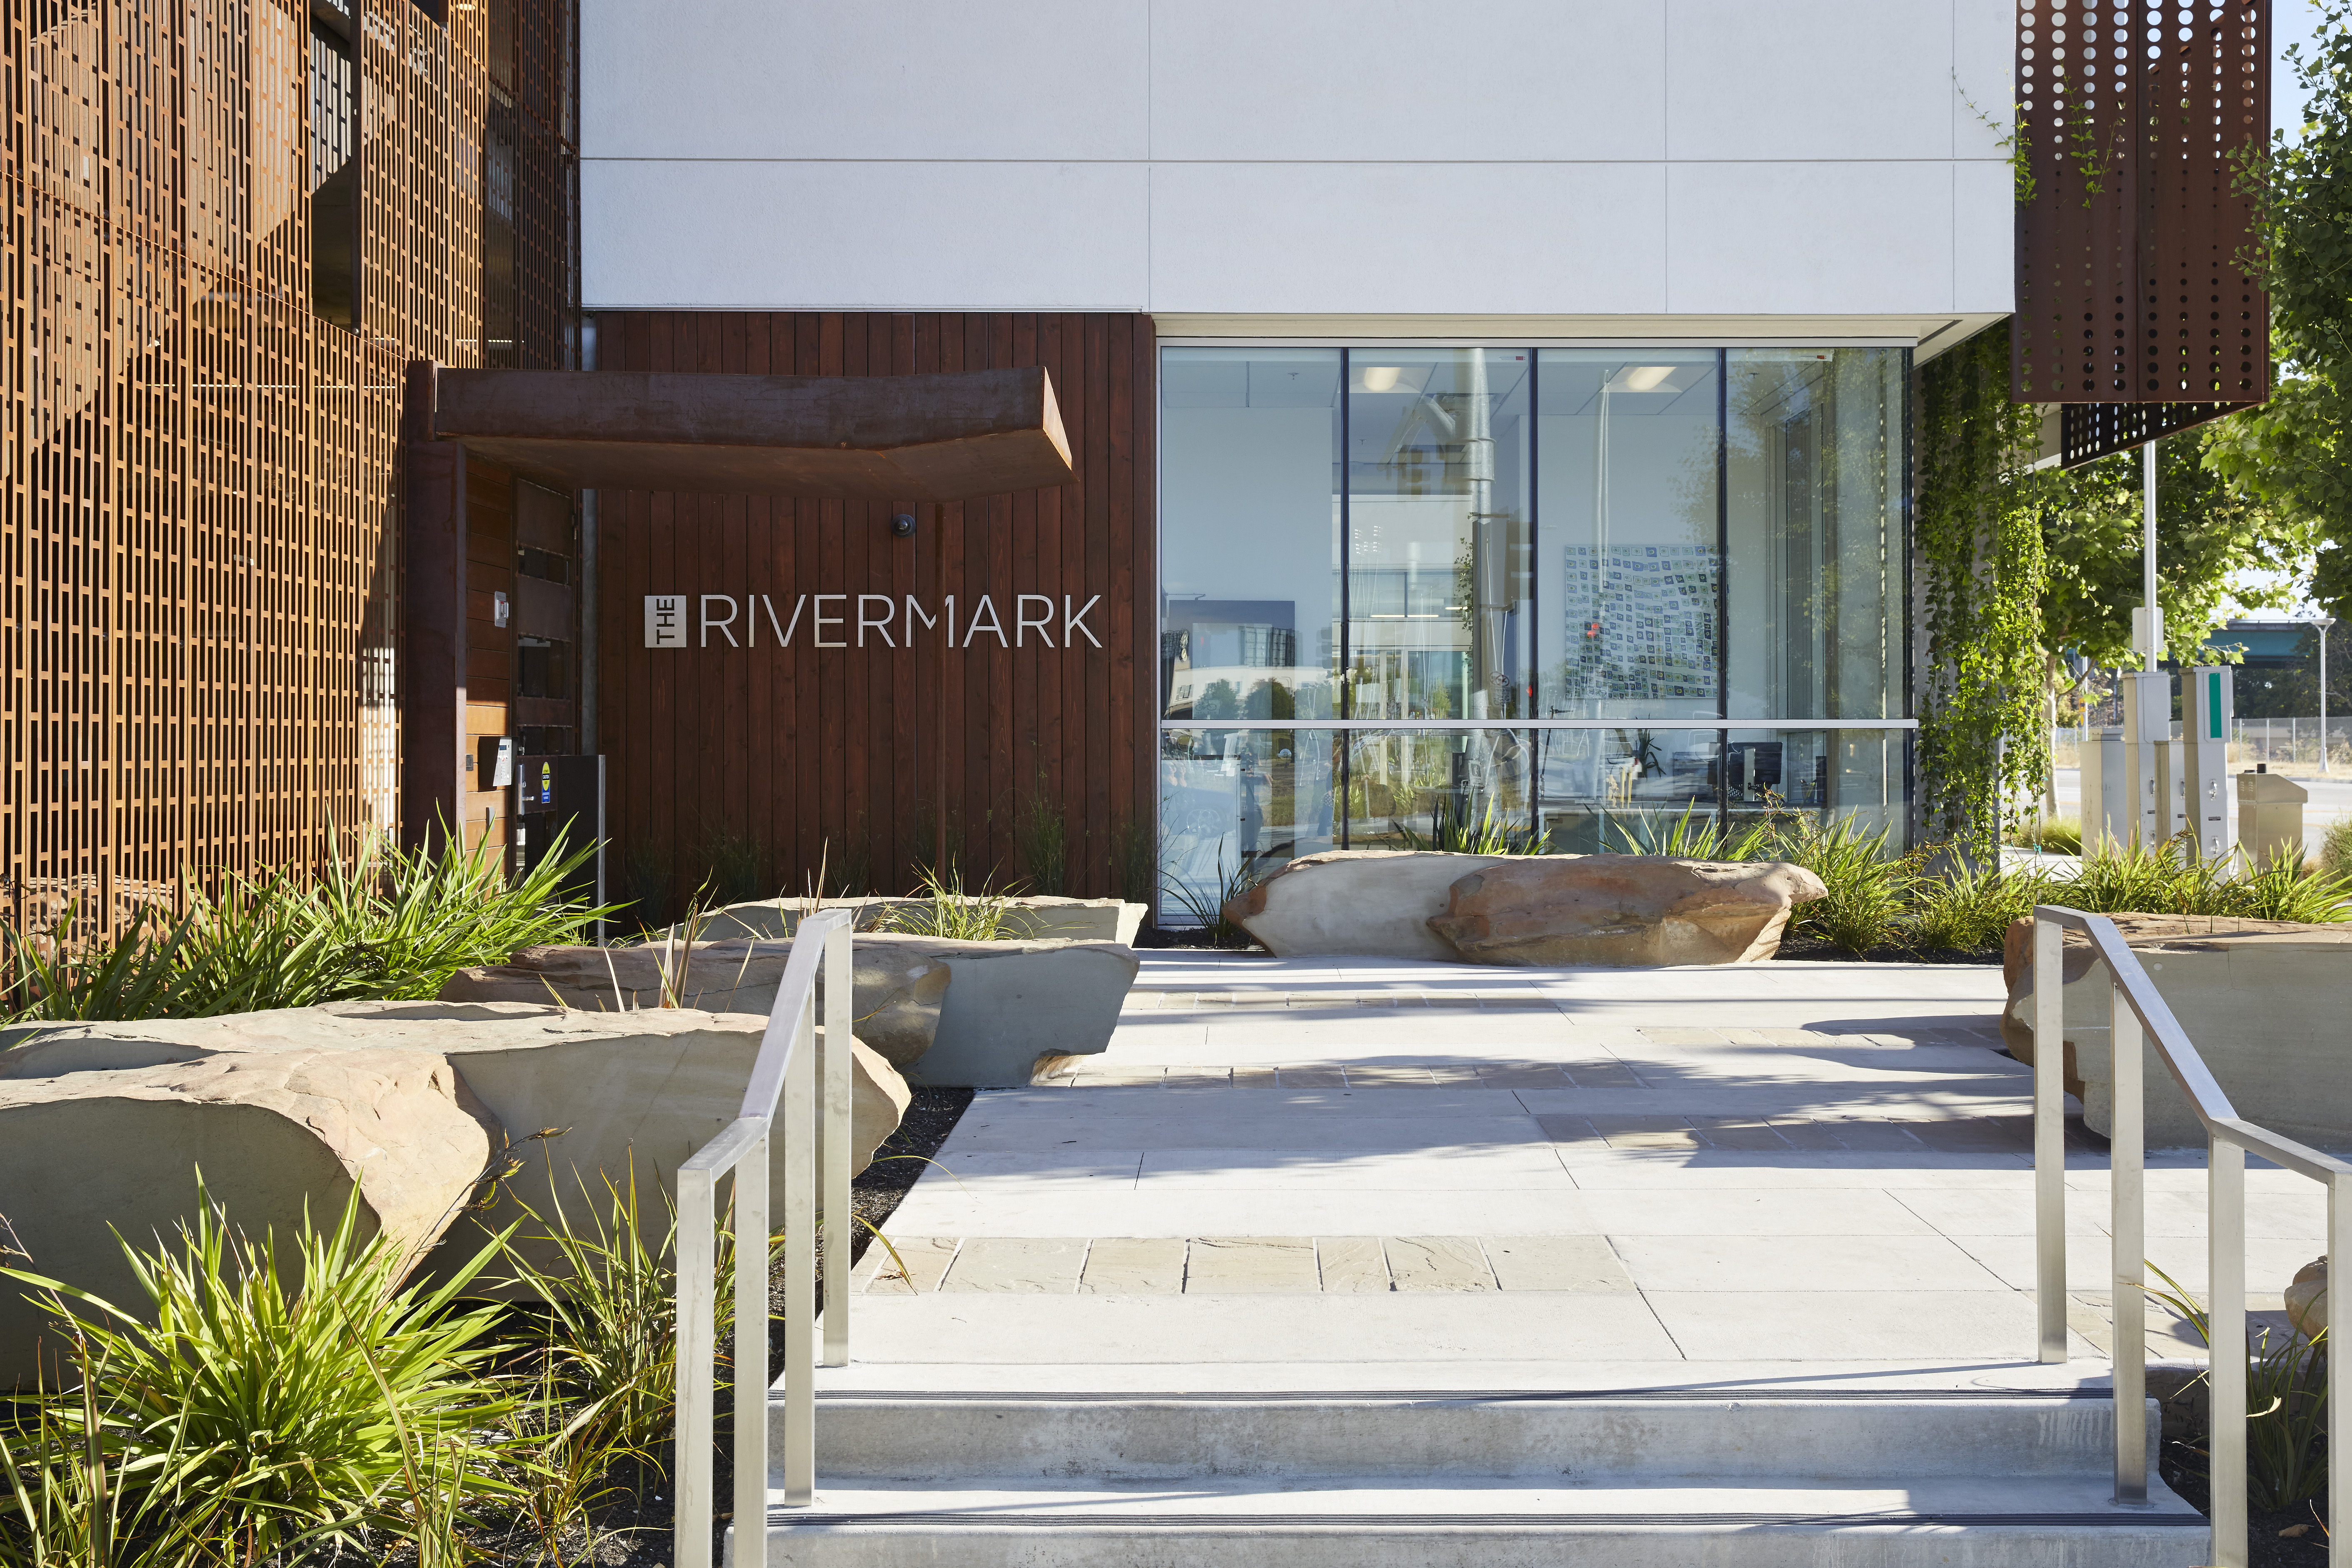 Entrance to Rivermark in Sacramento, Ca.